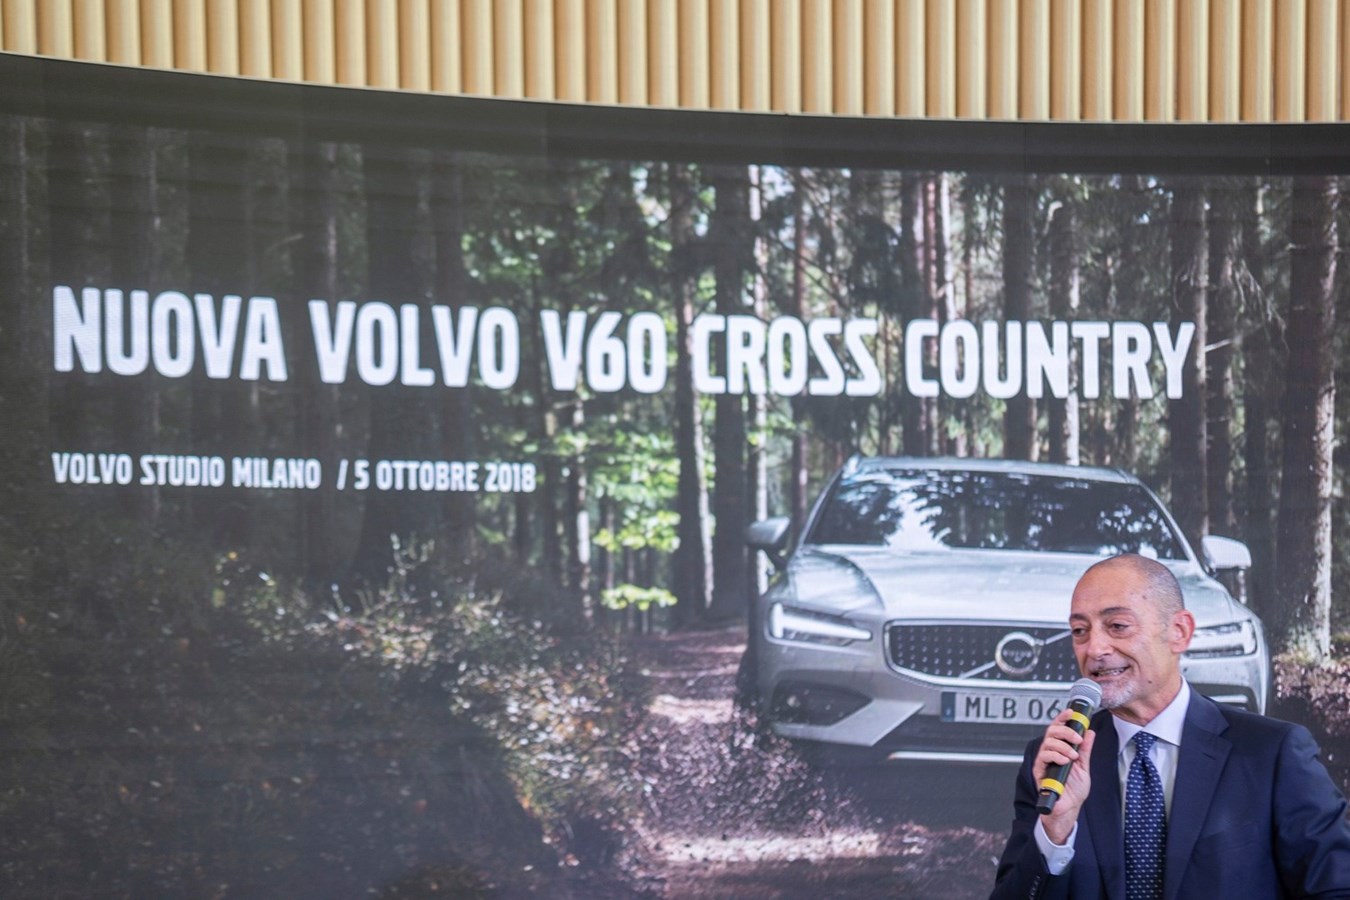 Volvo Studio Milano - 5 ottobre 2018 n. 16